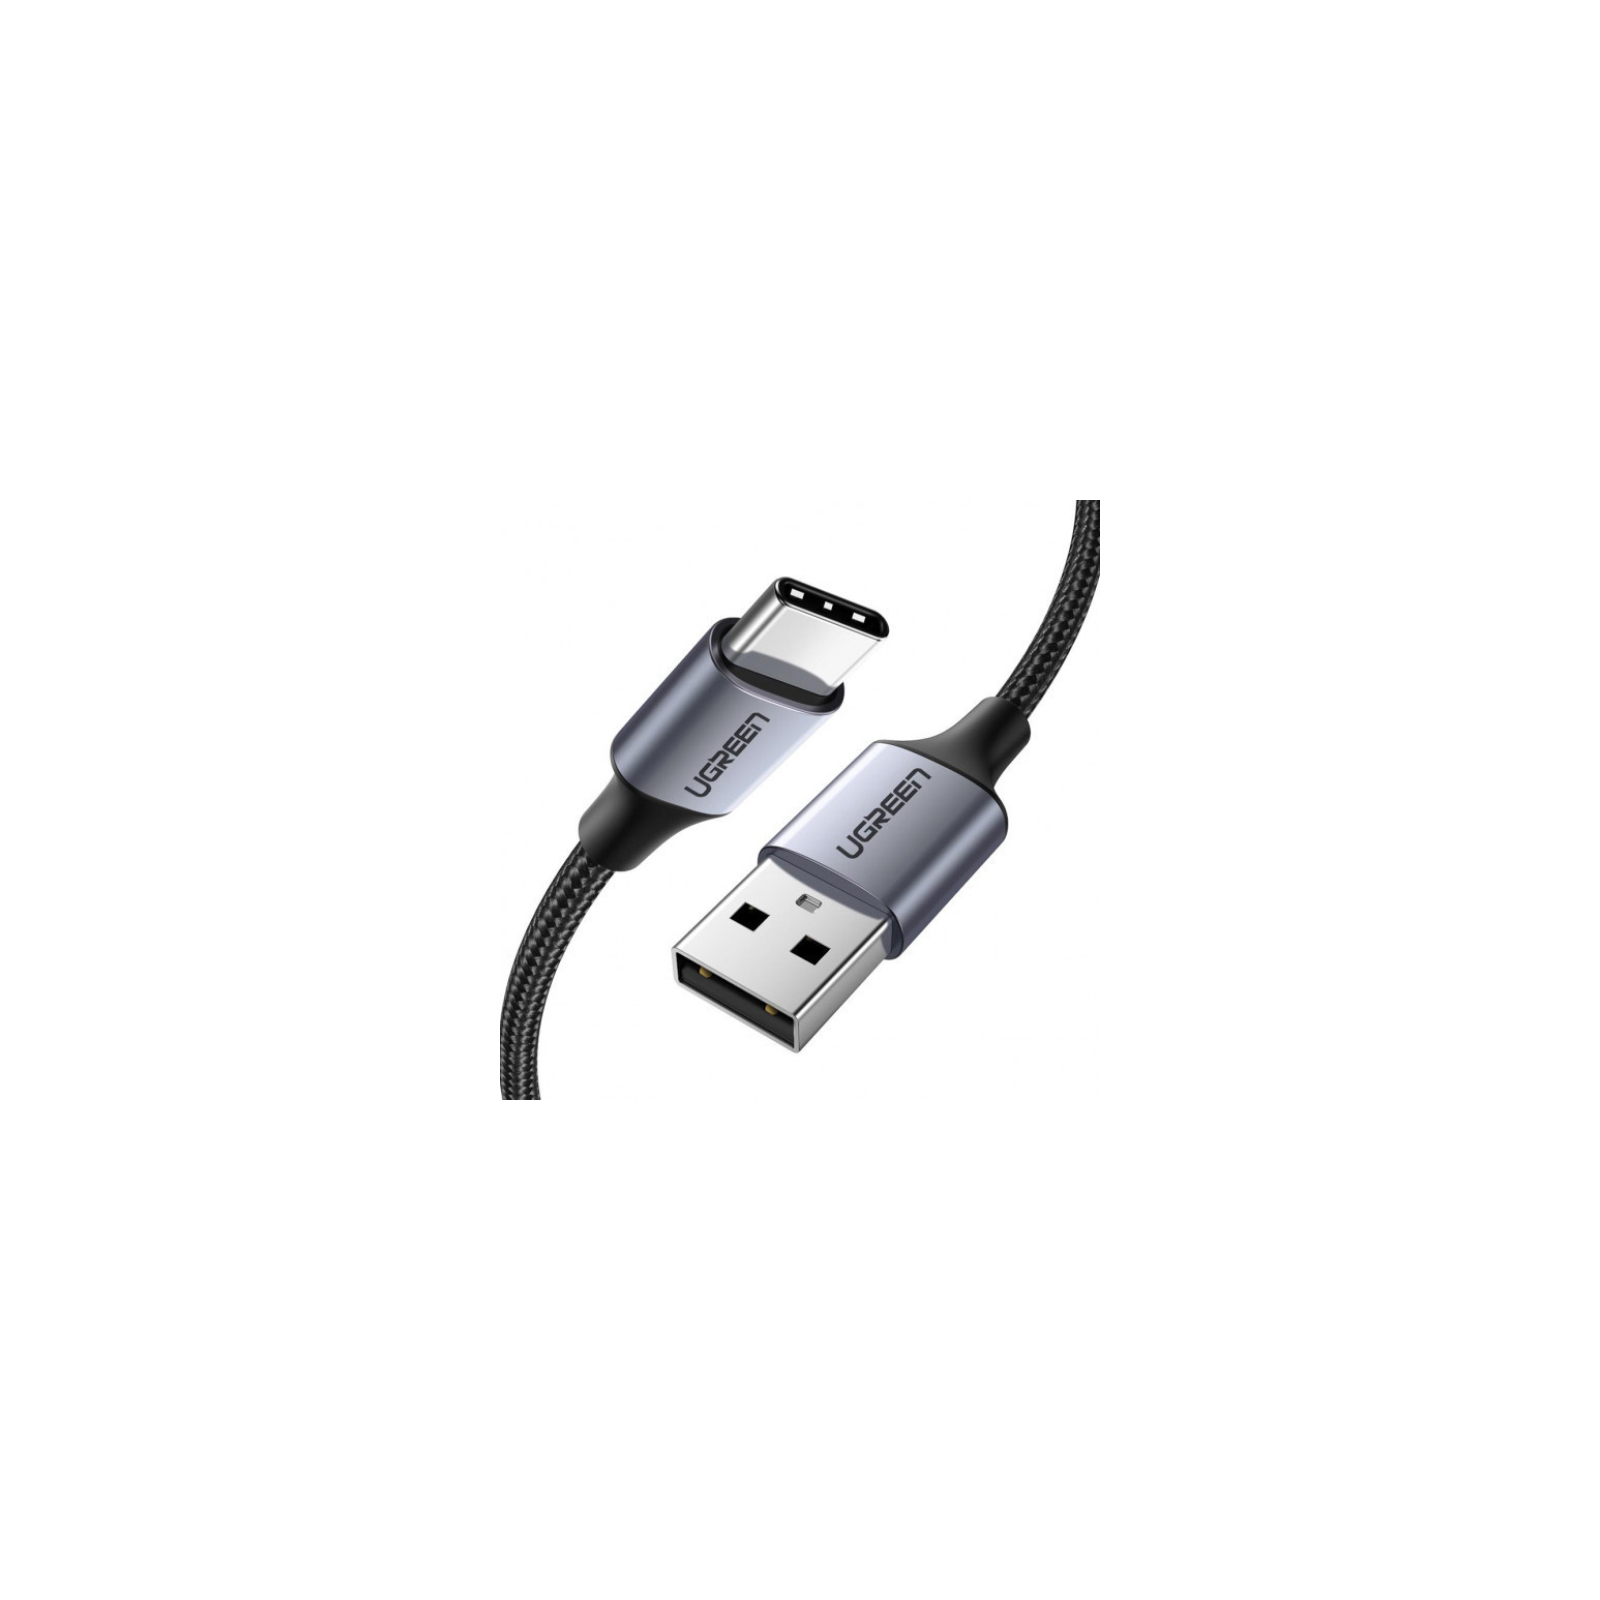 Дата кабель USB 2.0 AM to Type-C 3.0m 3.0A 18W US288 Space Gray Ugreen (60408) зображення 2